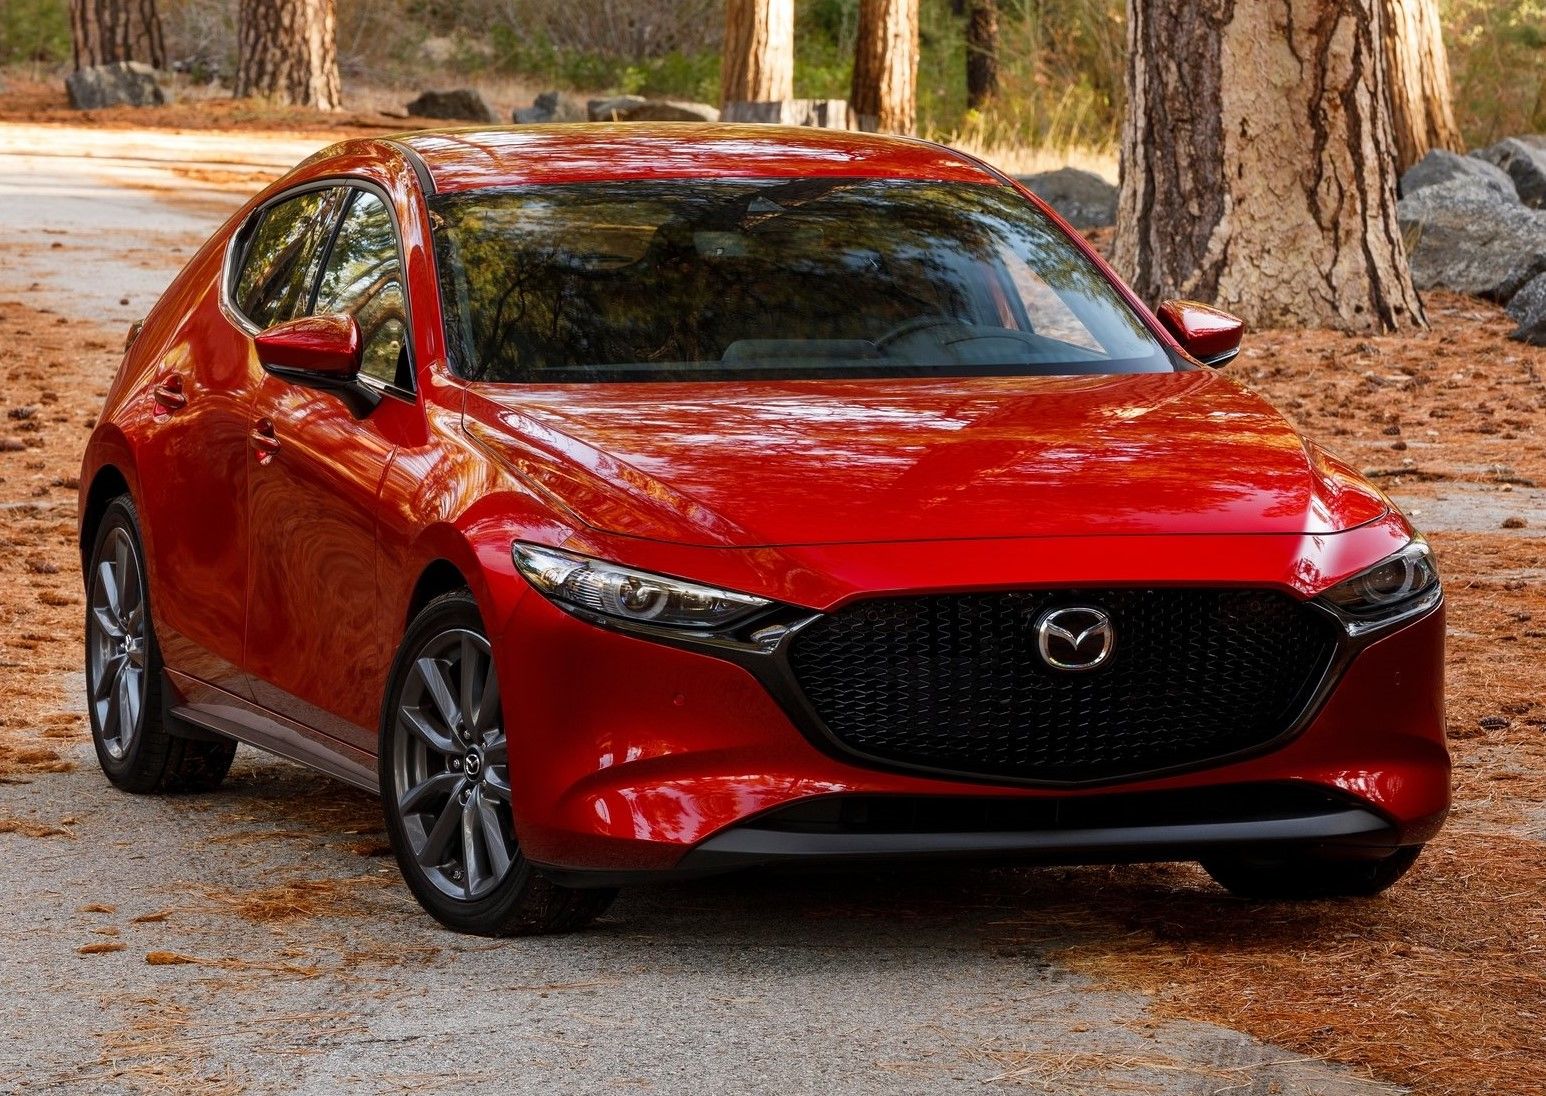 2019 Mazda3: Refined and Technologically Advanced